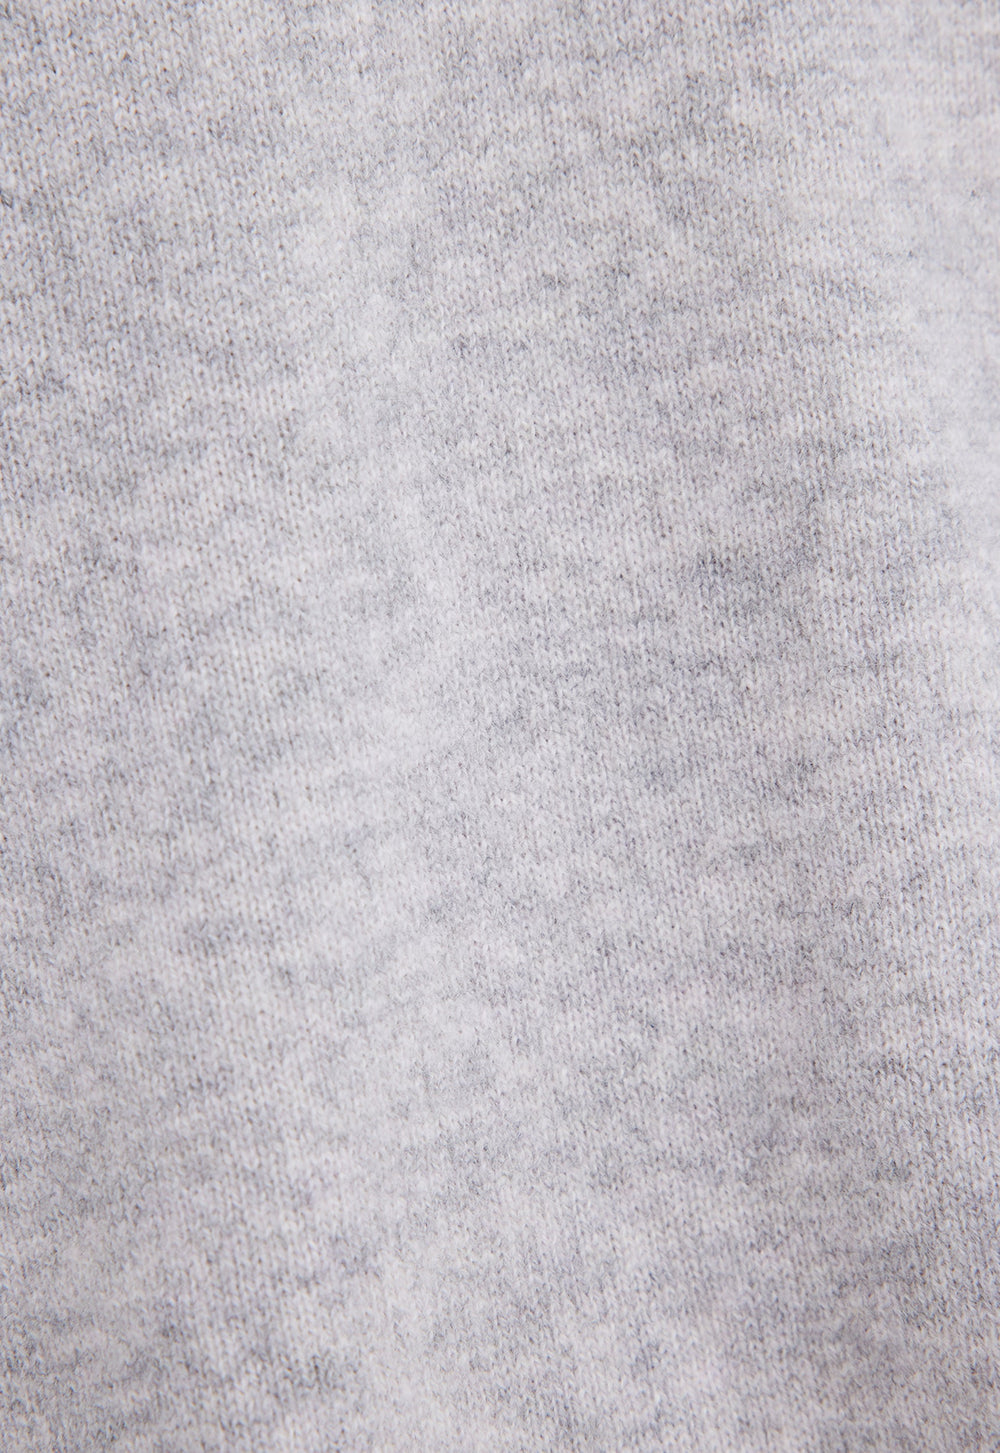 Jac+Jack Sharpo Cashmere Sweater - Pale Grey Marle